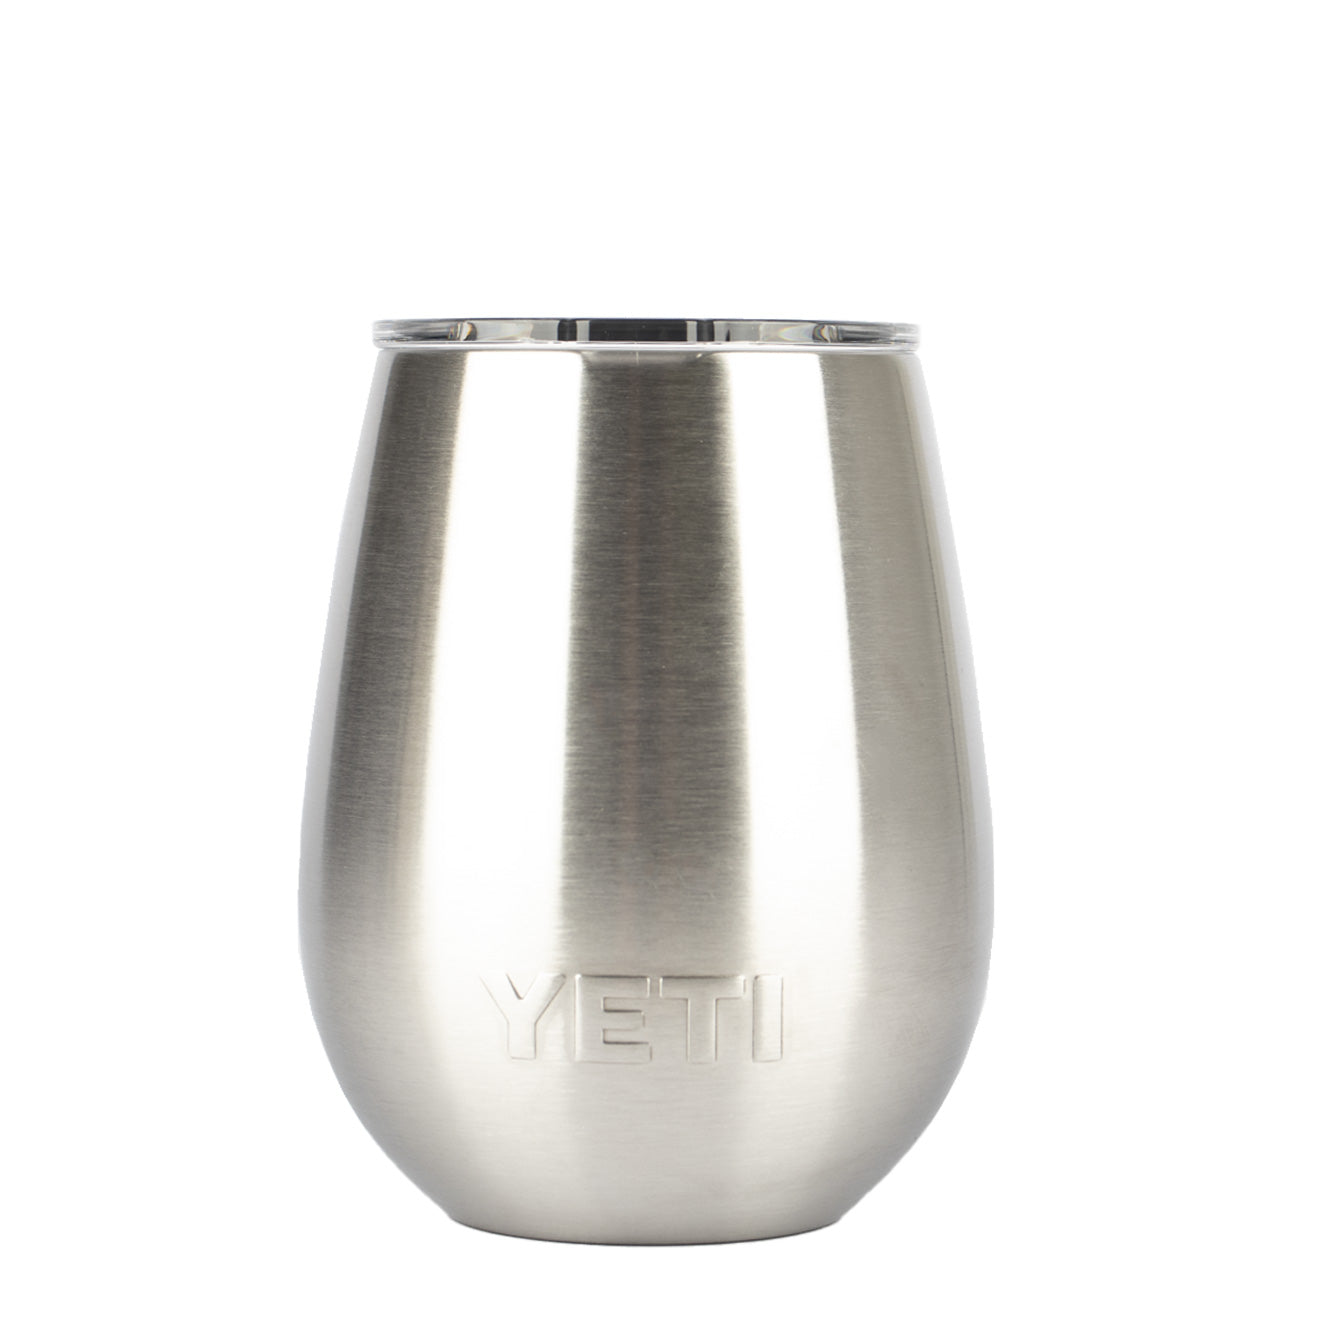 Yeti Rambler 10oz Wine Tumbler One Size / Silver / Stainless Steel